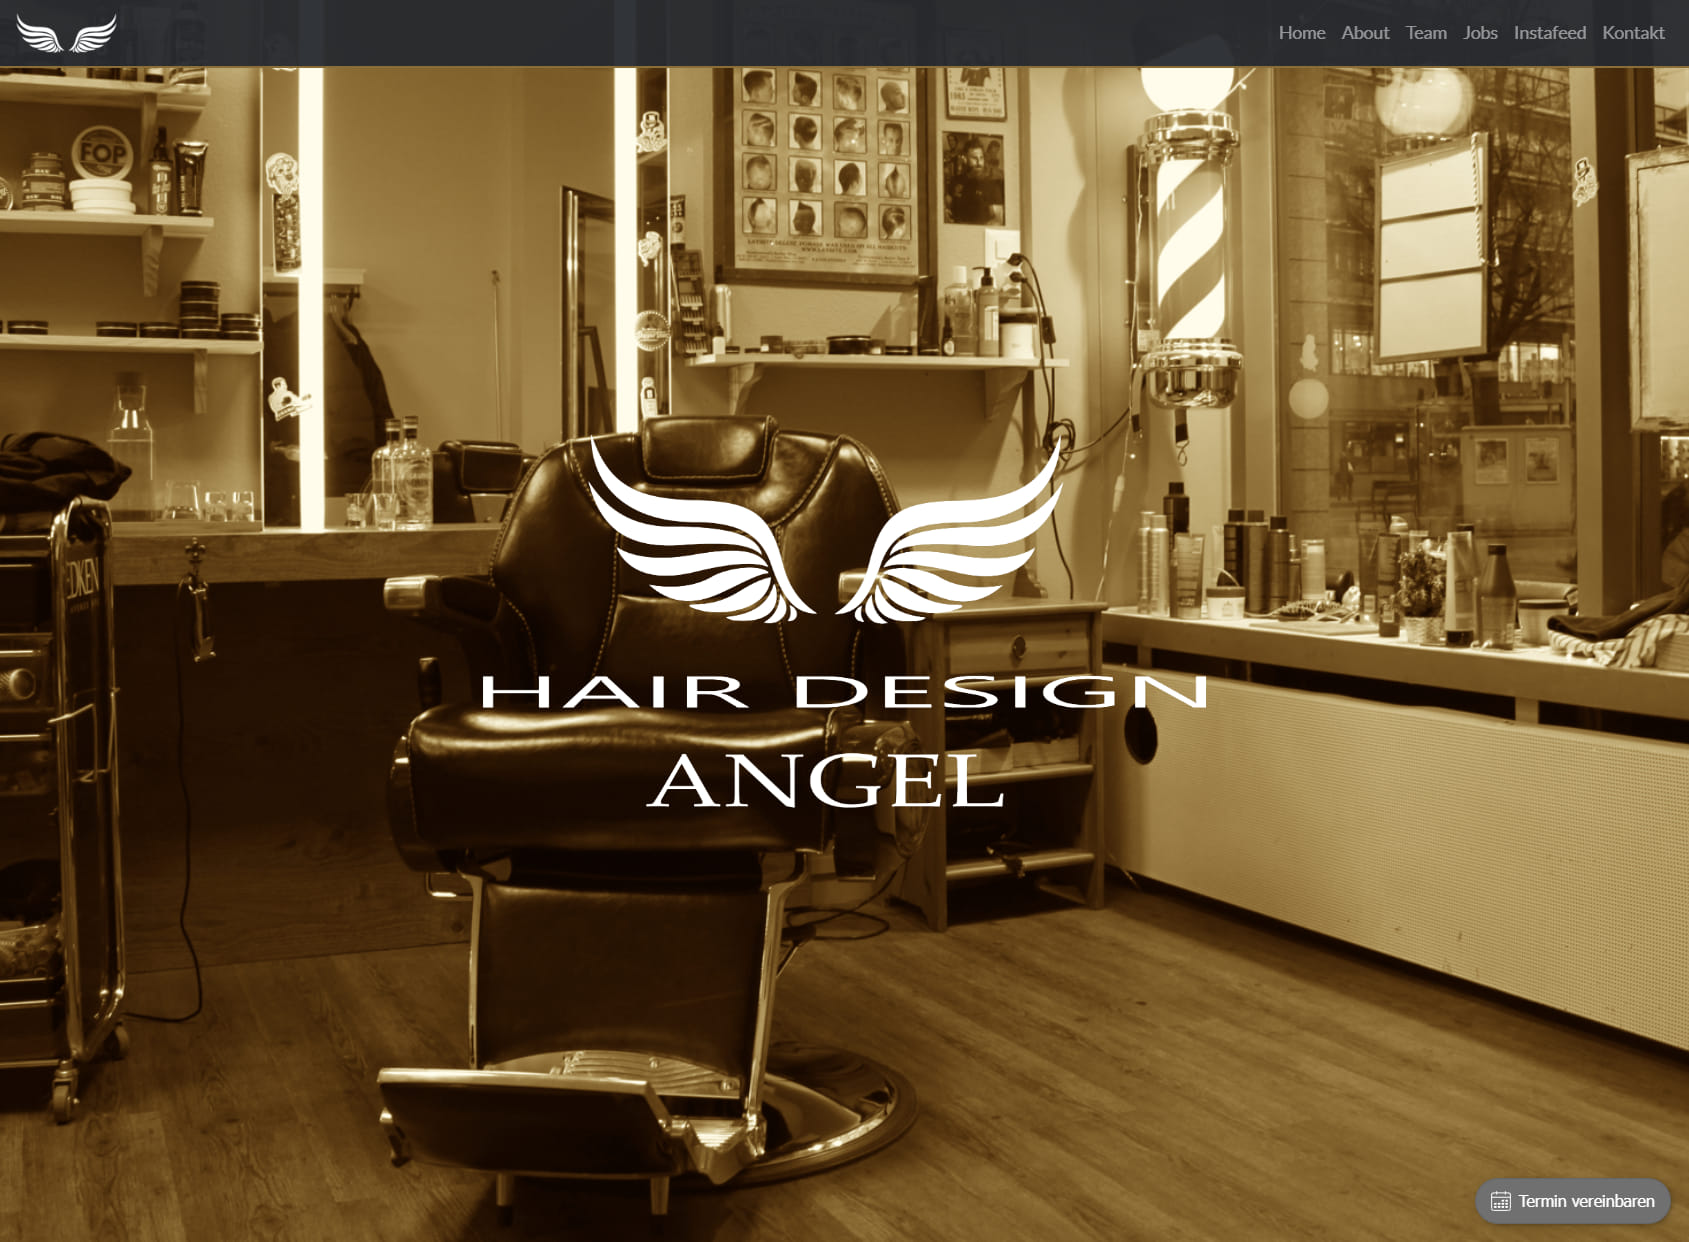 Hair Design Angel GmbH